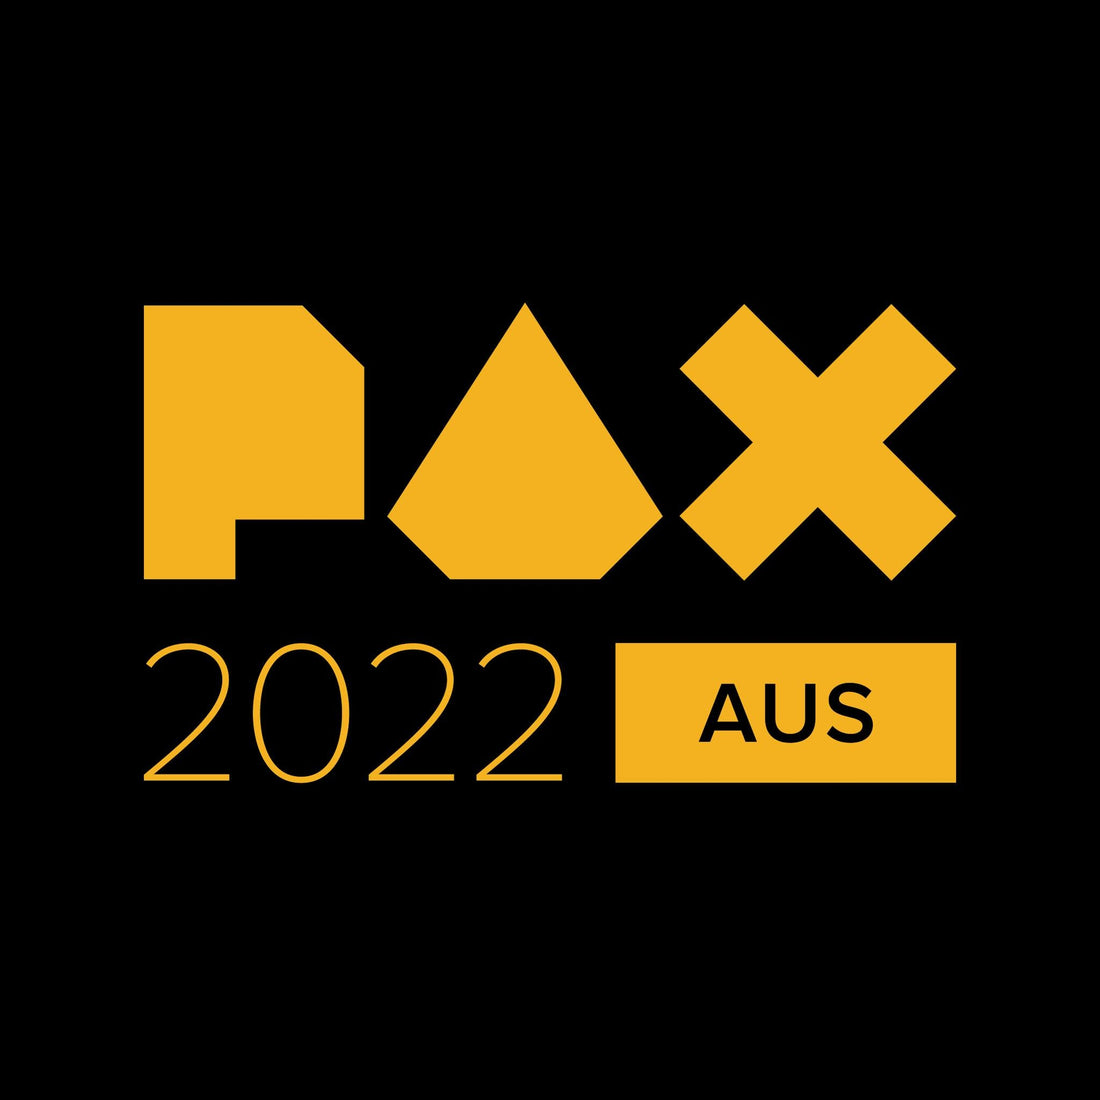 Trading at Pax Aus 2022! - Battlefield Accessories